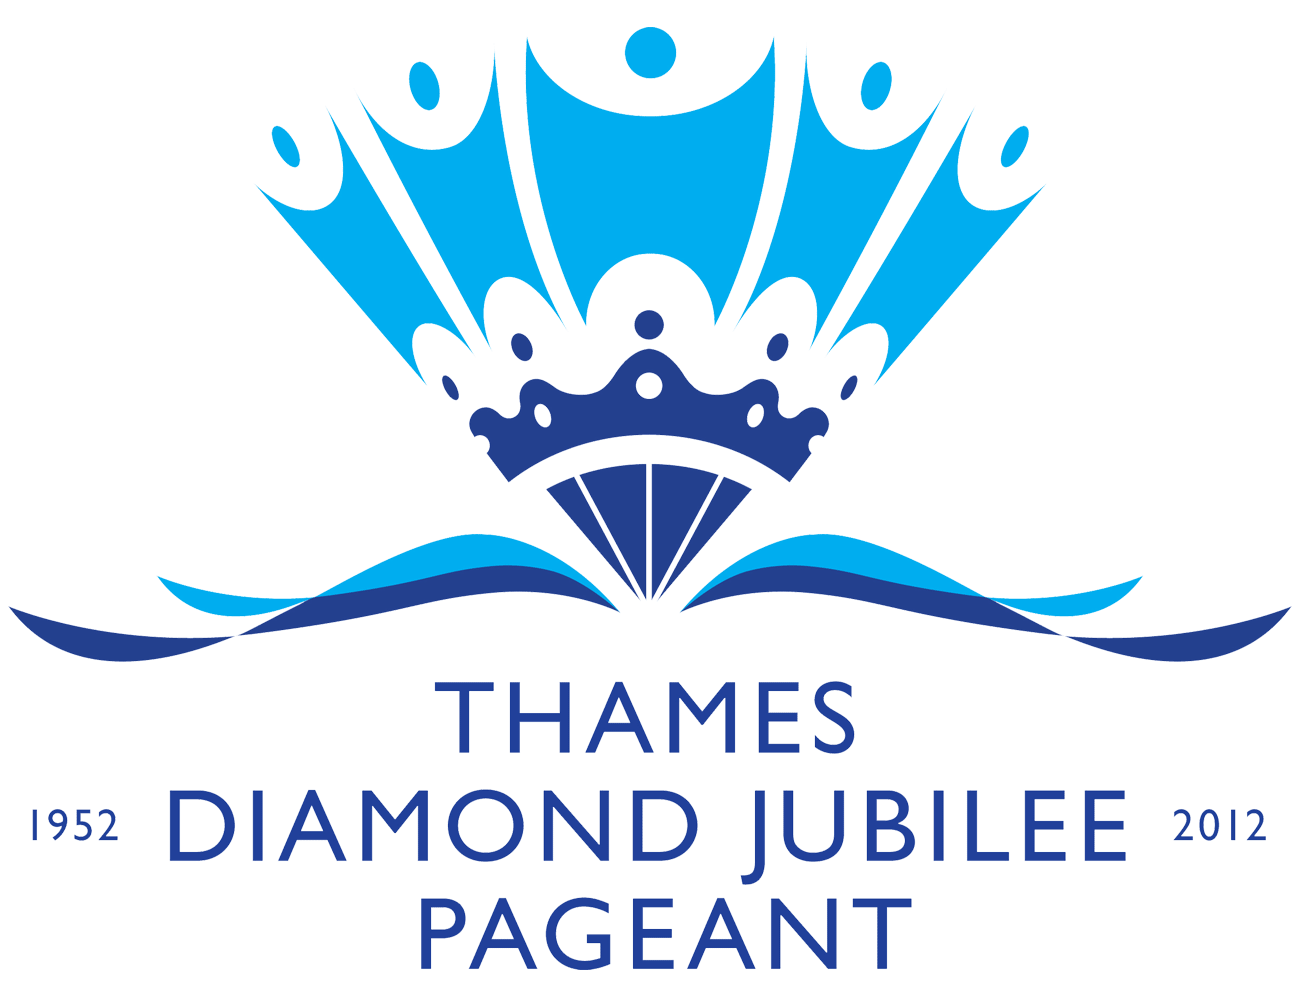 Thames Diamond Jubilee Pageant 2012 logo